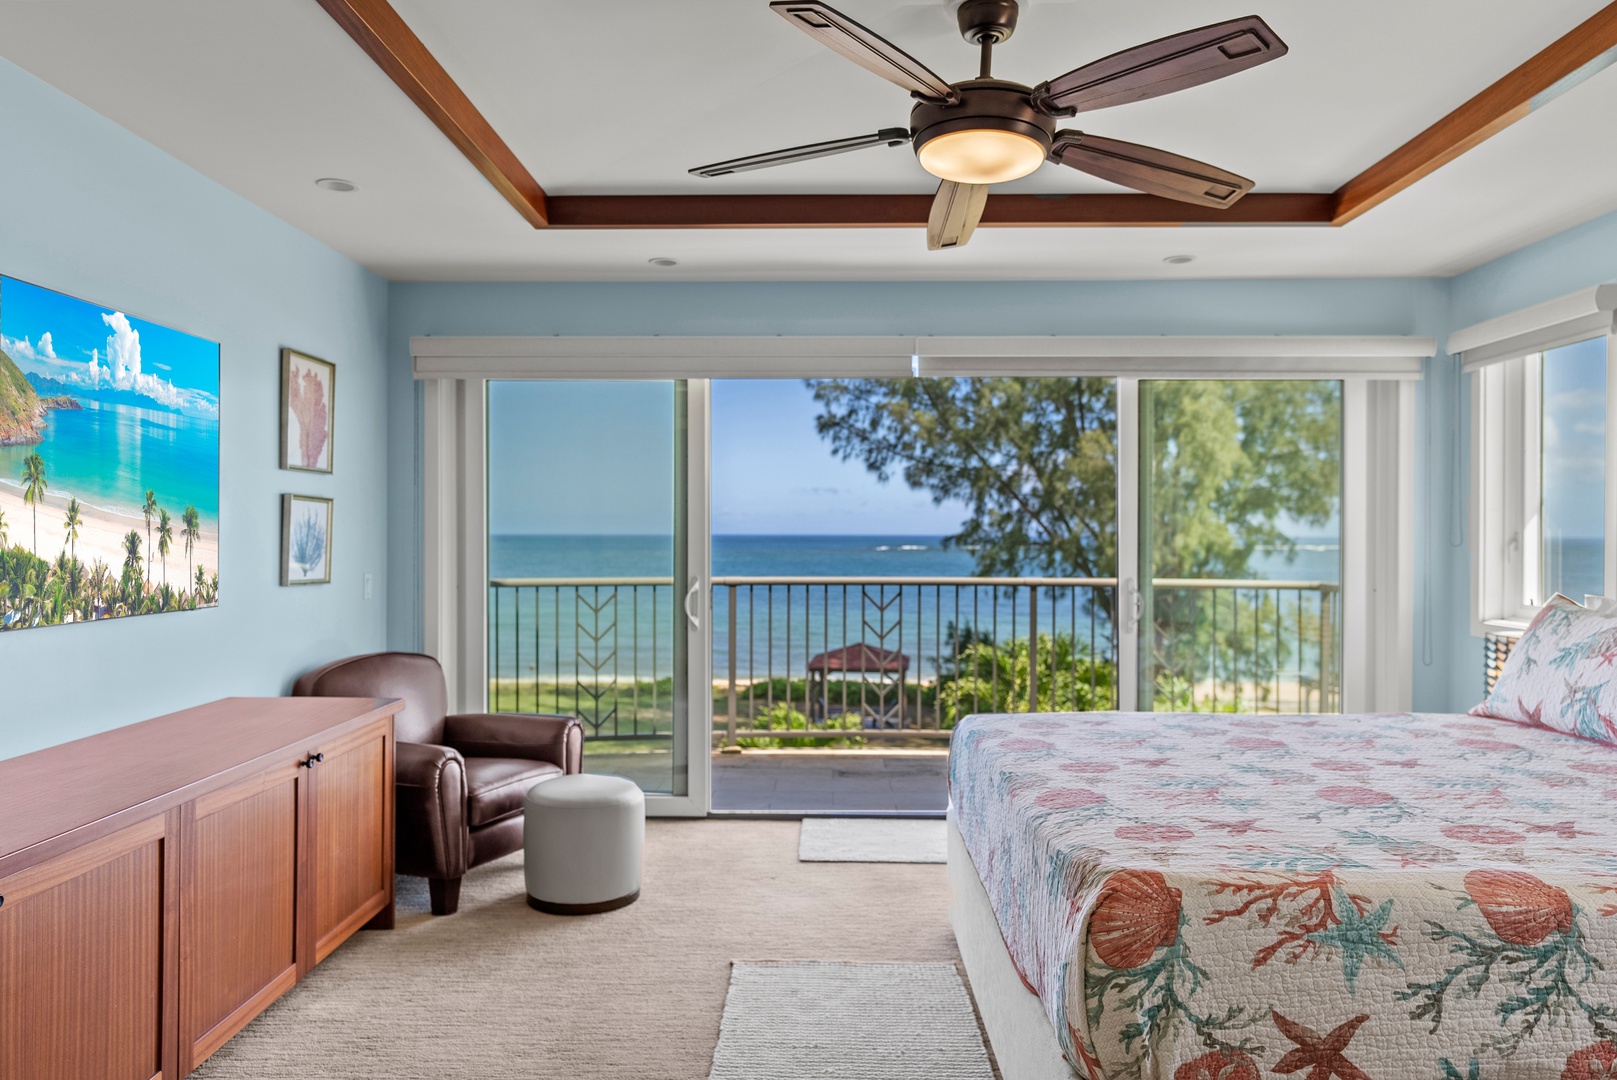 Waialua Vacation Rentals, Kala'iku Main - Primary bedroom with Ocean Views